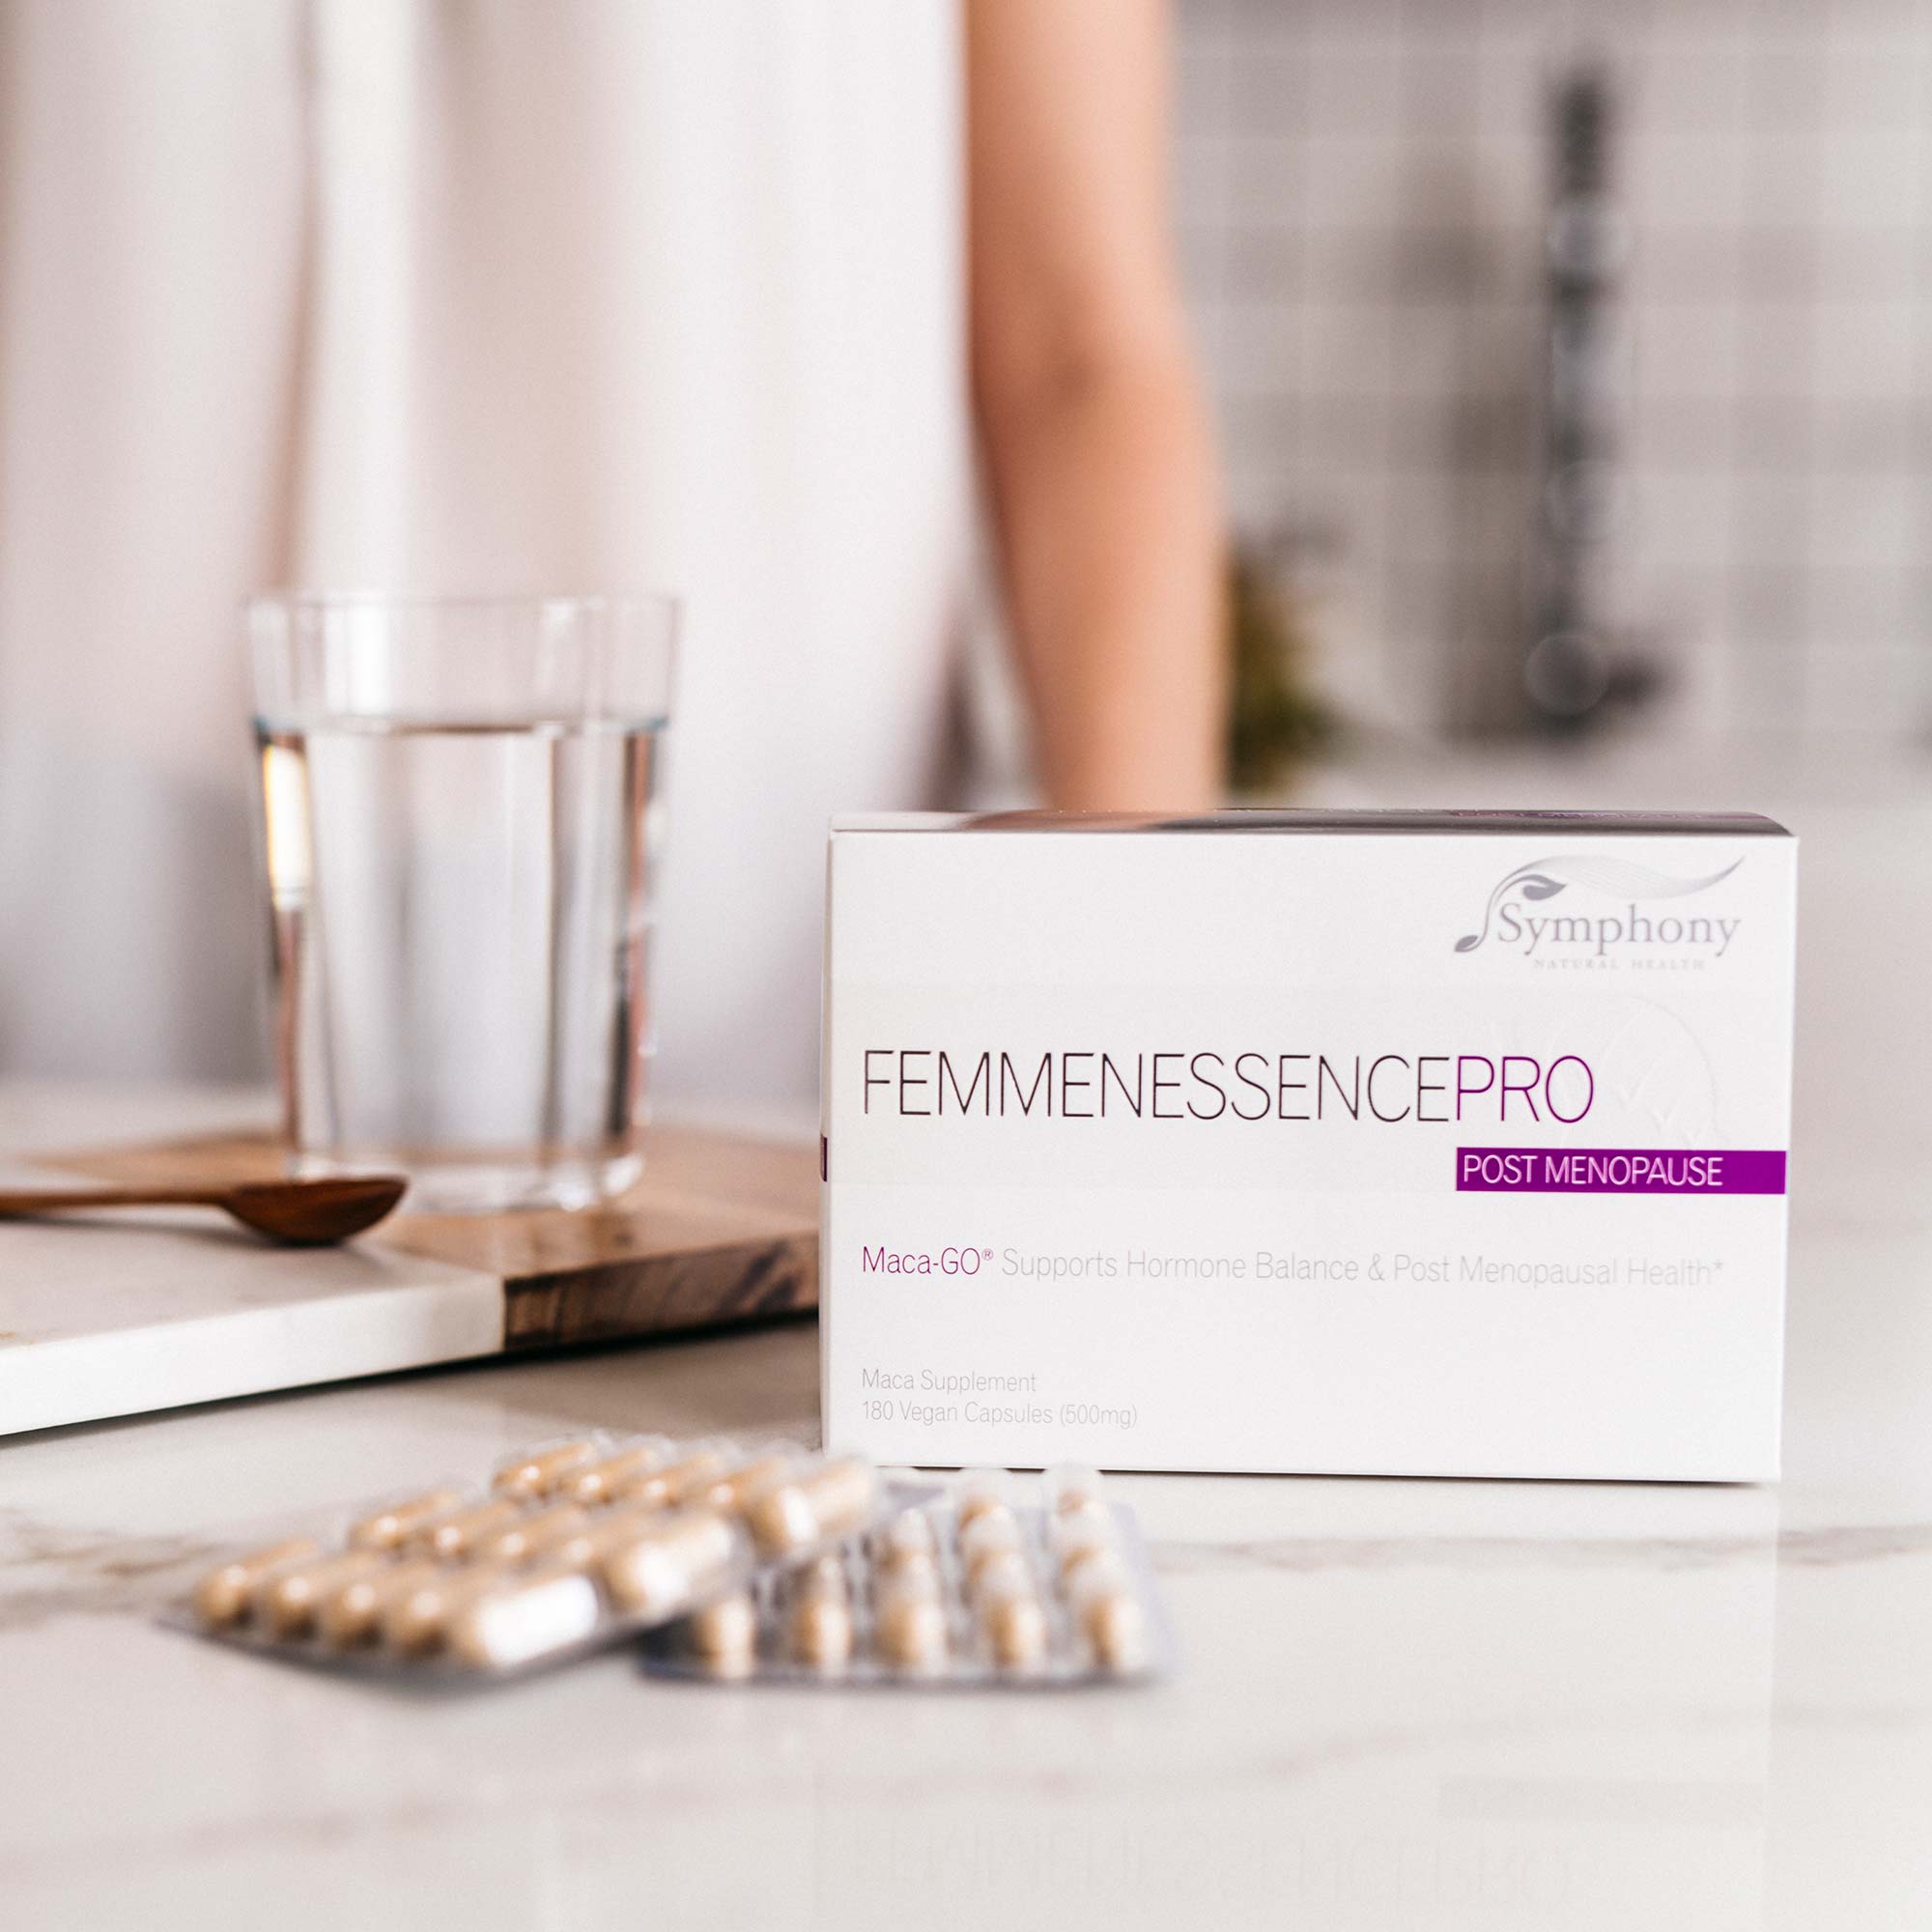 FemmenessencePRO supports Hormone Balance and post menopausal health